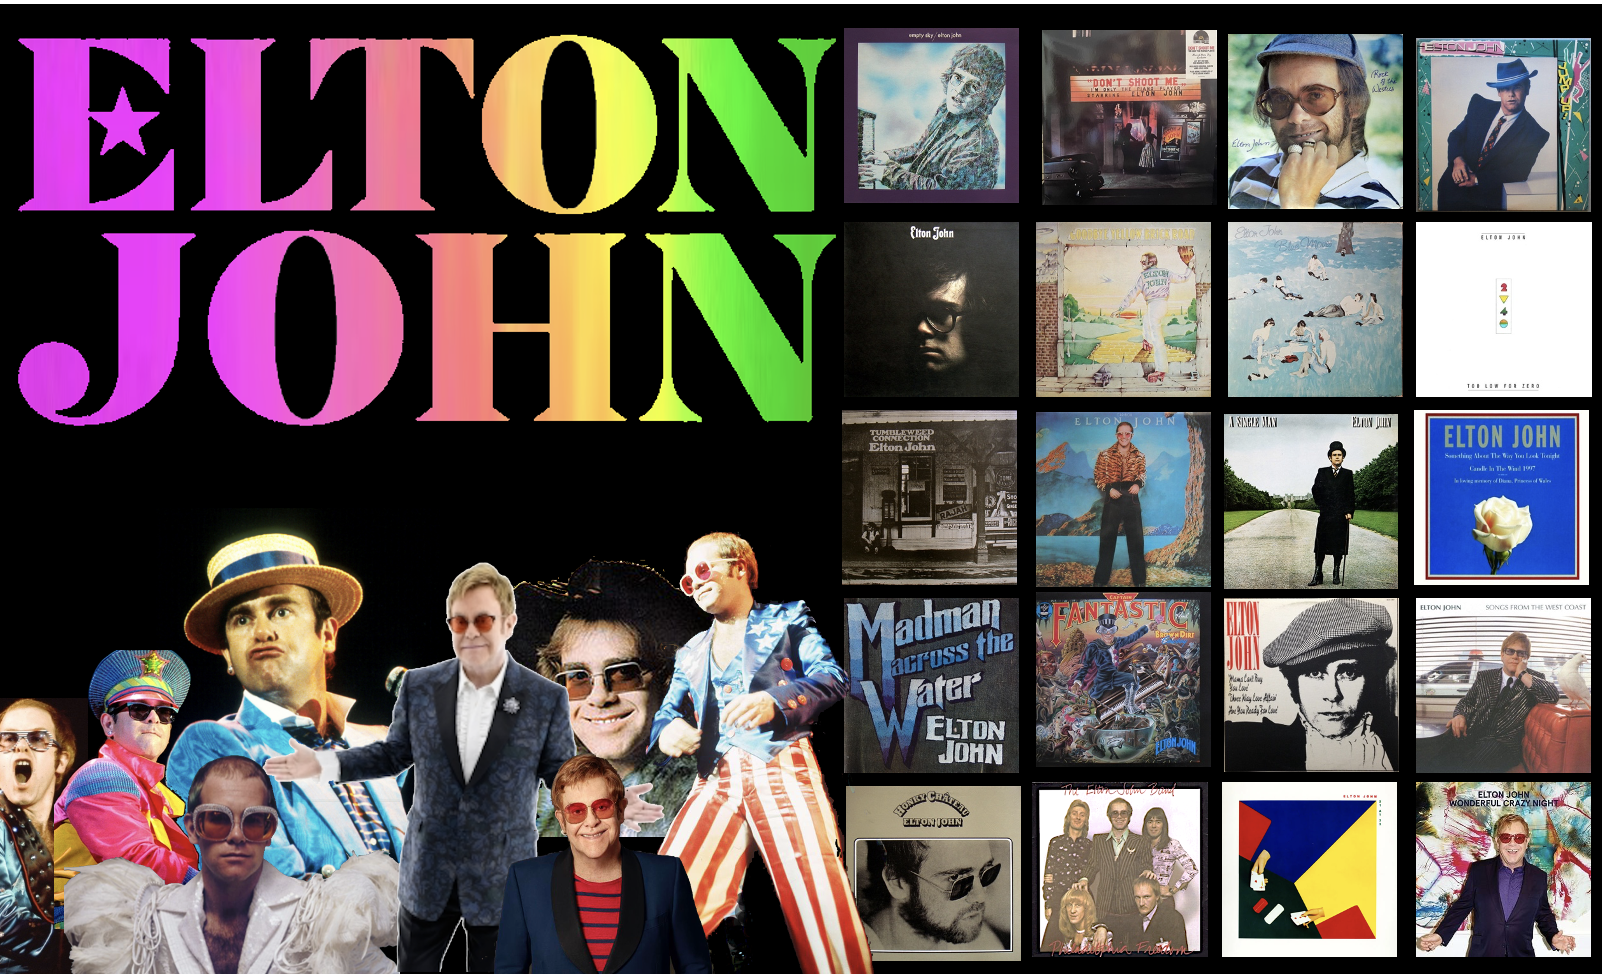 Simply The Best Sax: The Hits Of Elton John Sacrifice (In The Style Of Elton  John) Lyrics